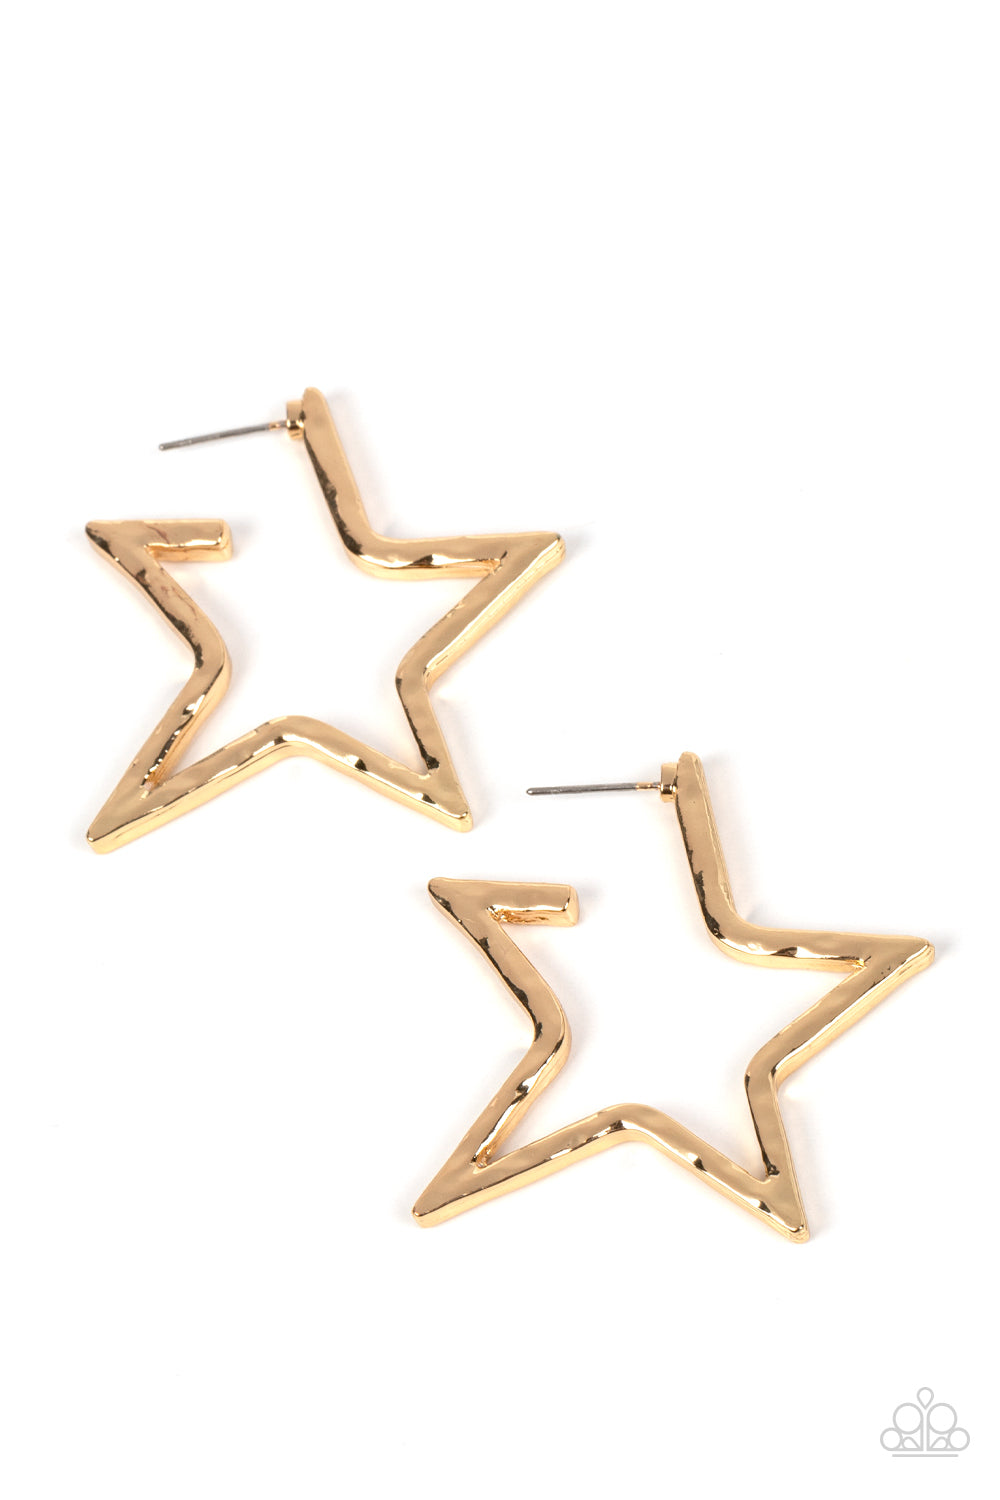 All-Star Attitude - Gold Hoop Earrings - Princess Glam Shop